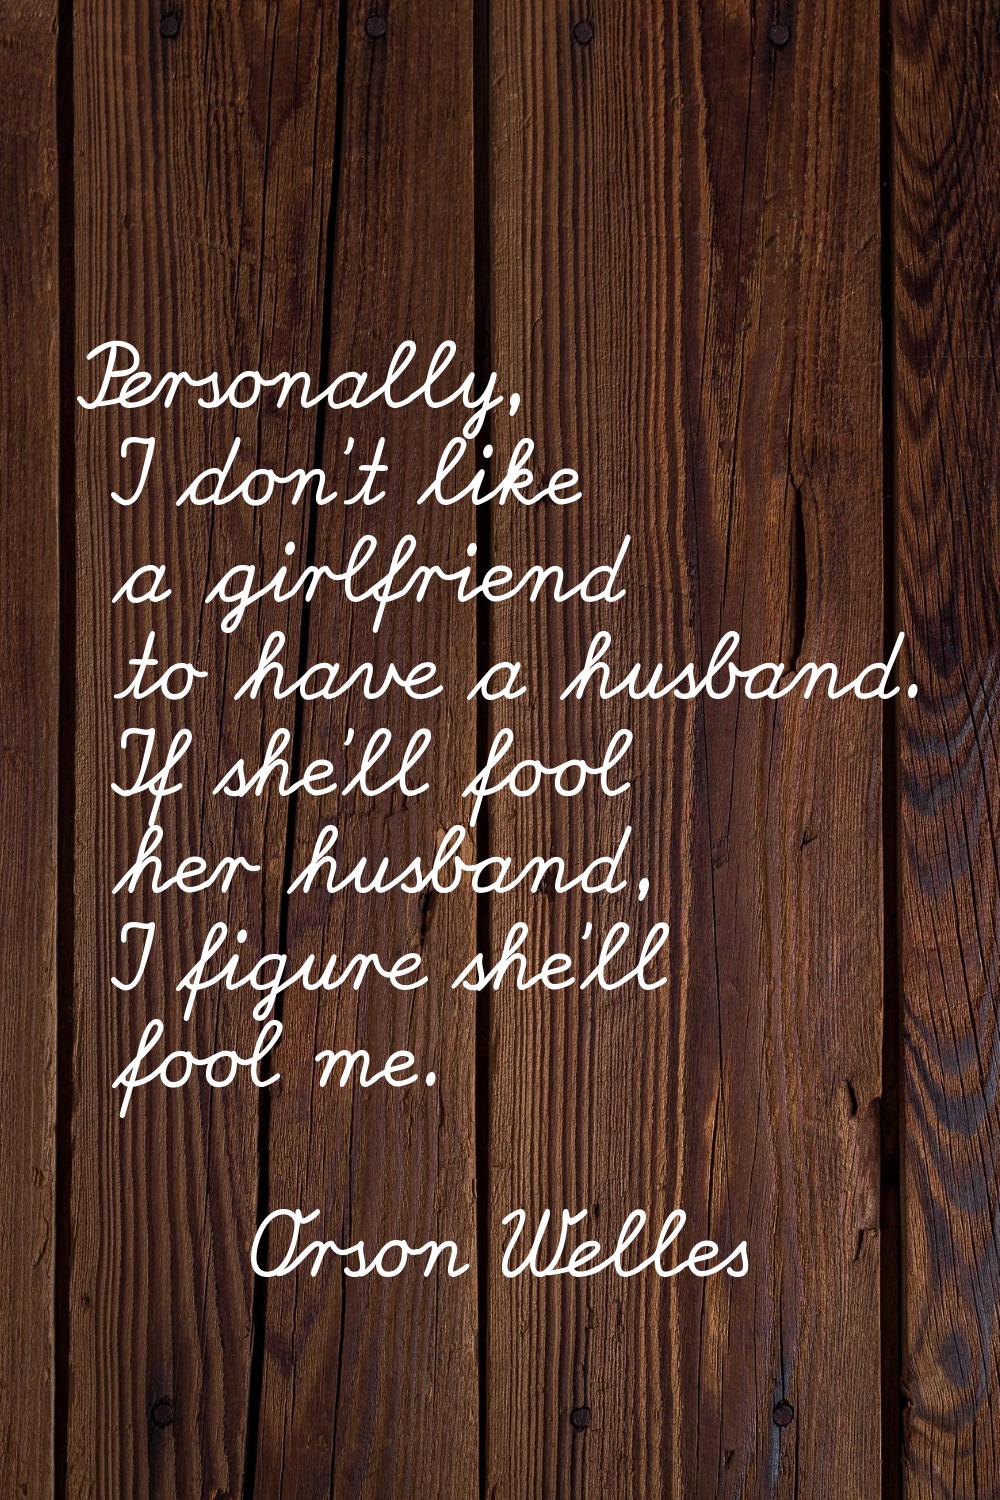 Personally, I don't like a girlfriend to have a husband. If she'll fool her husband, I figure she'l